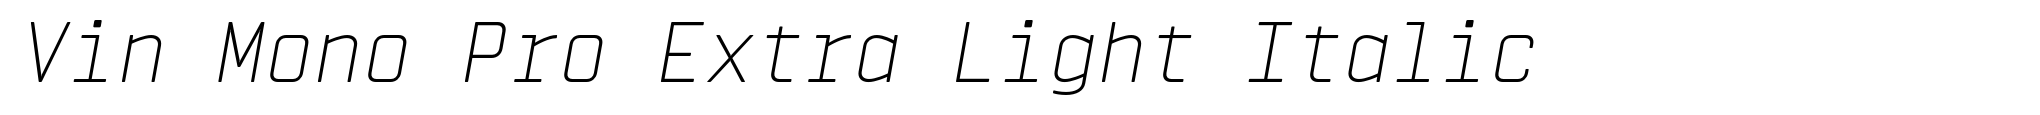 Vin Mono Pro Extra Light Italic image